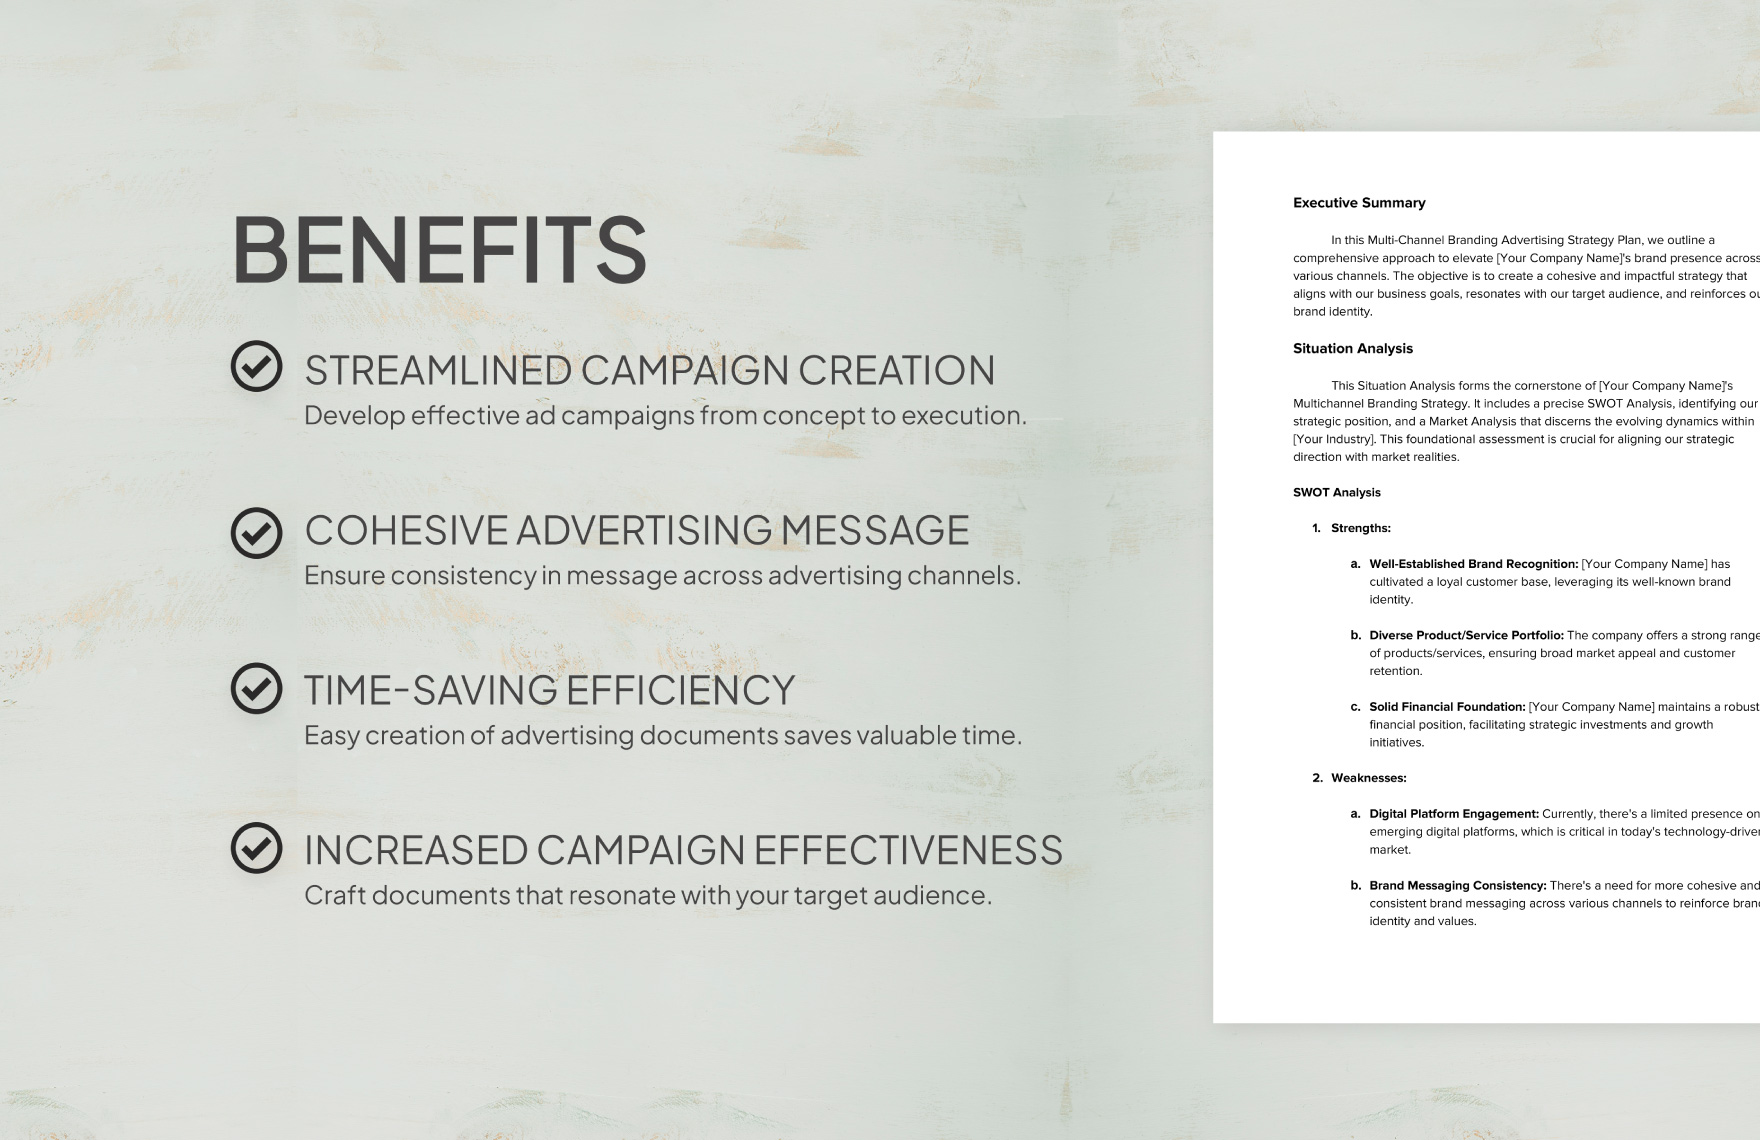 Multichannel Branding Advertising Strategy Plan Template